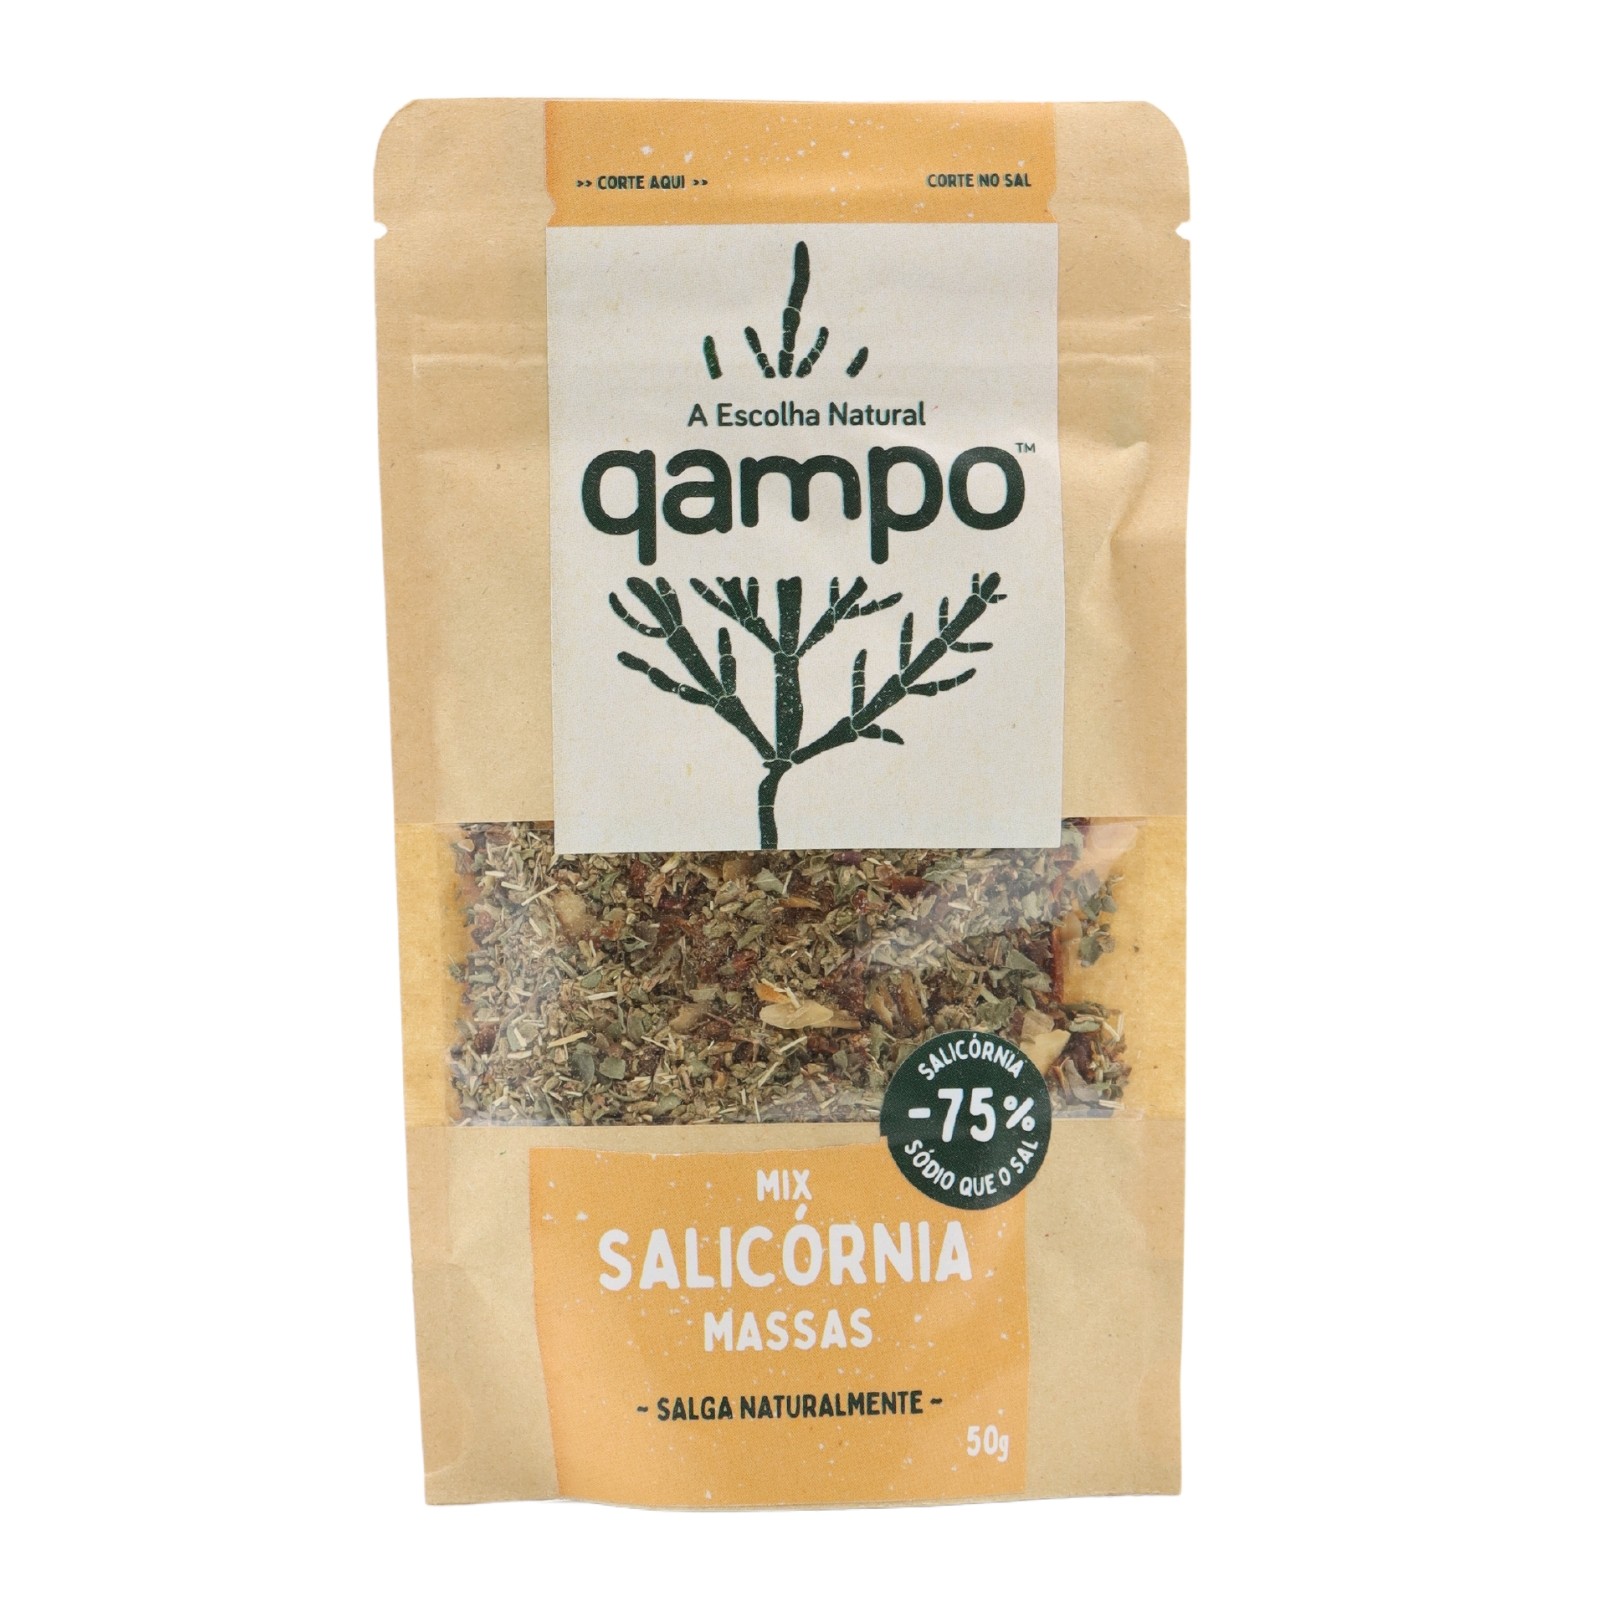 Qampo Mix Salicornia for Pasta